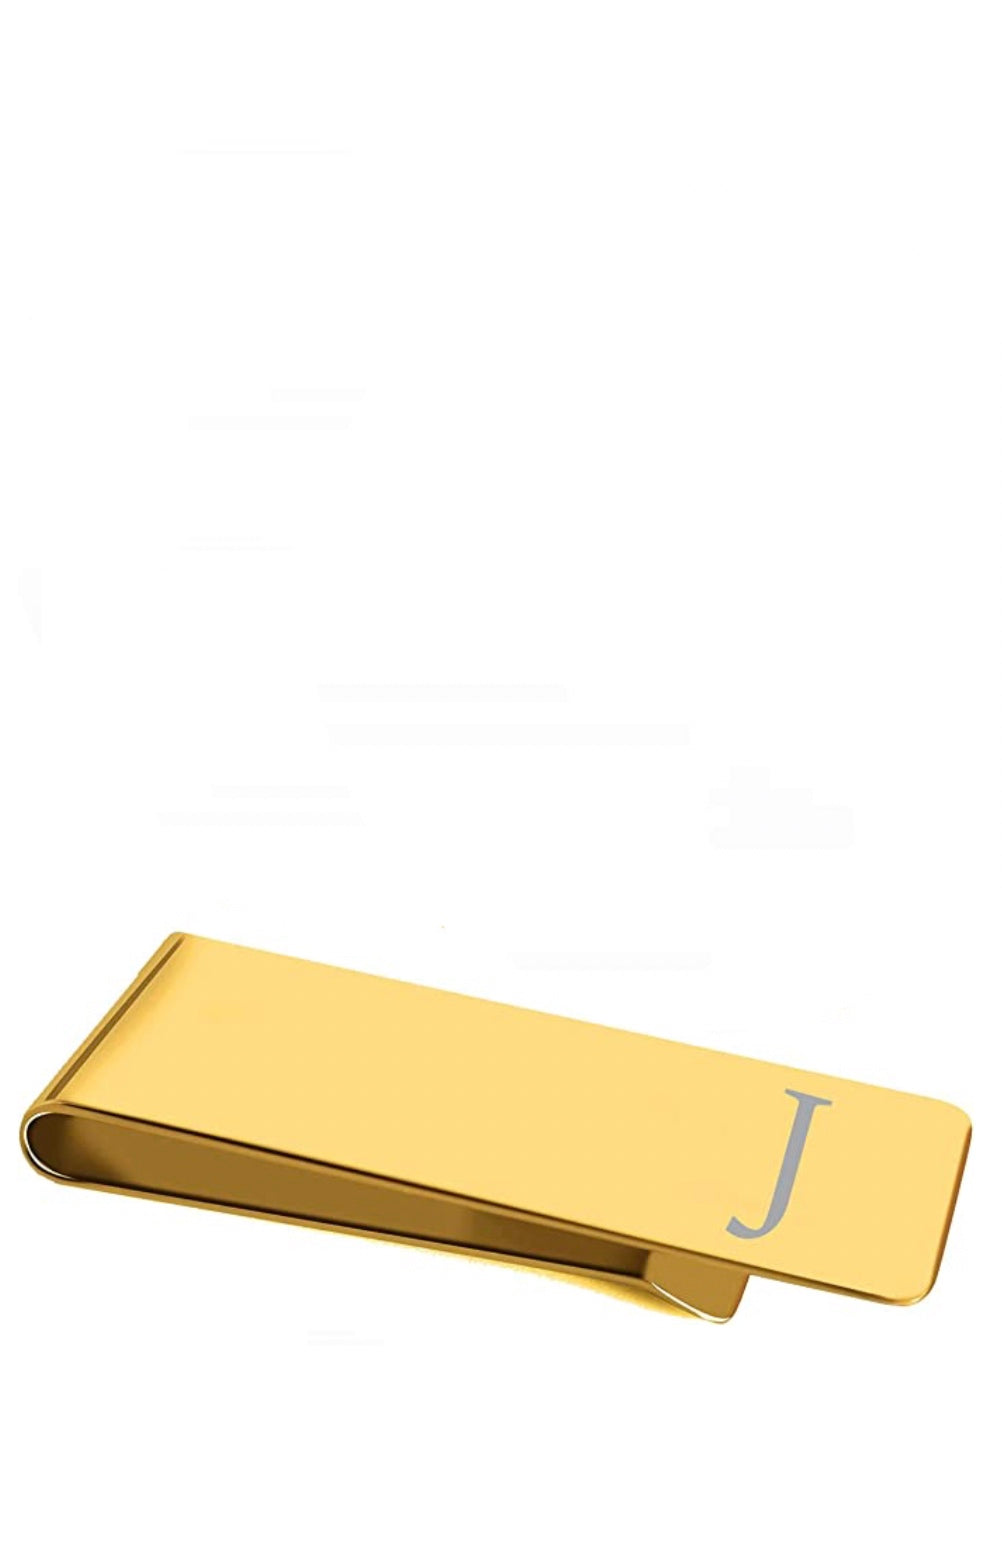 18K Gold Initial "J" Money Clip